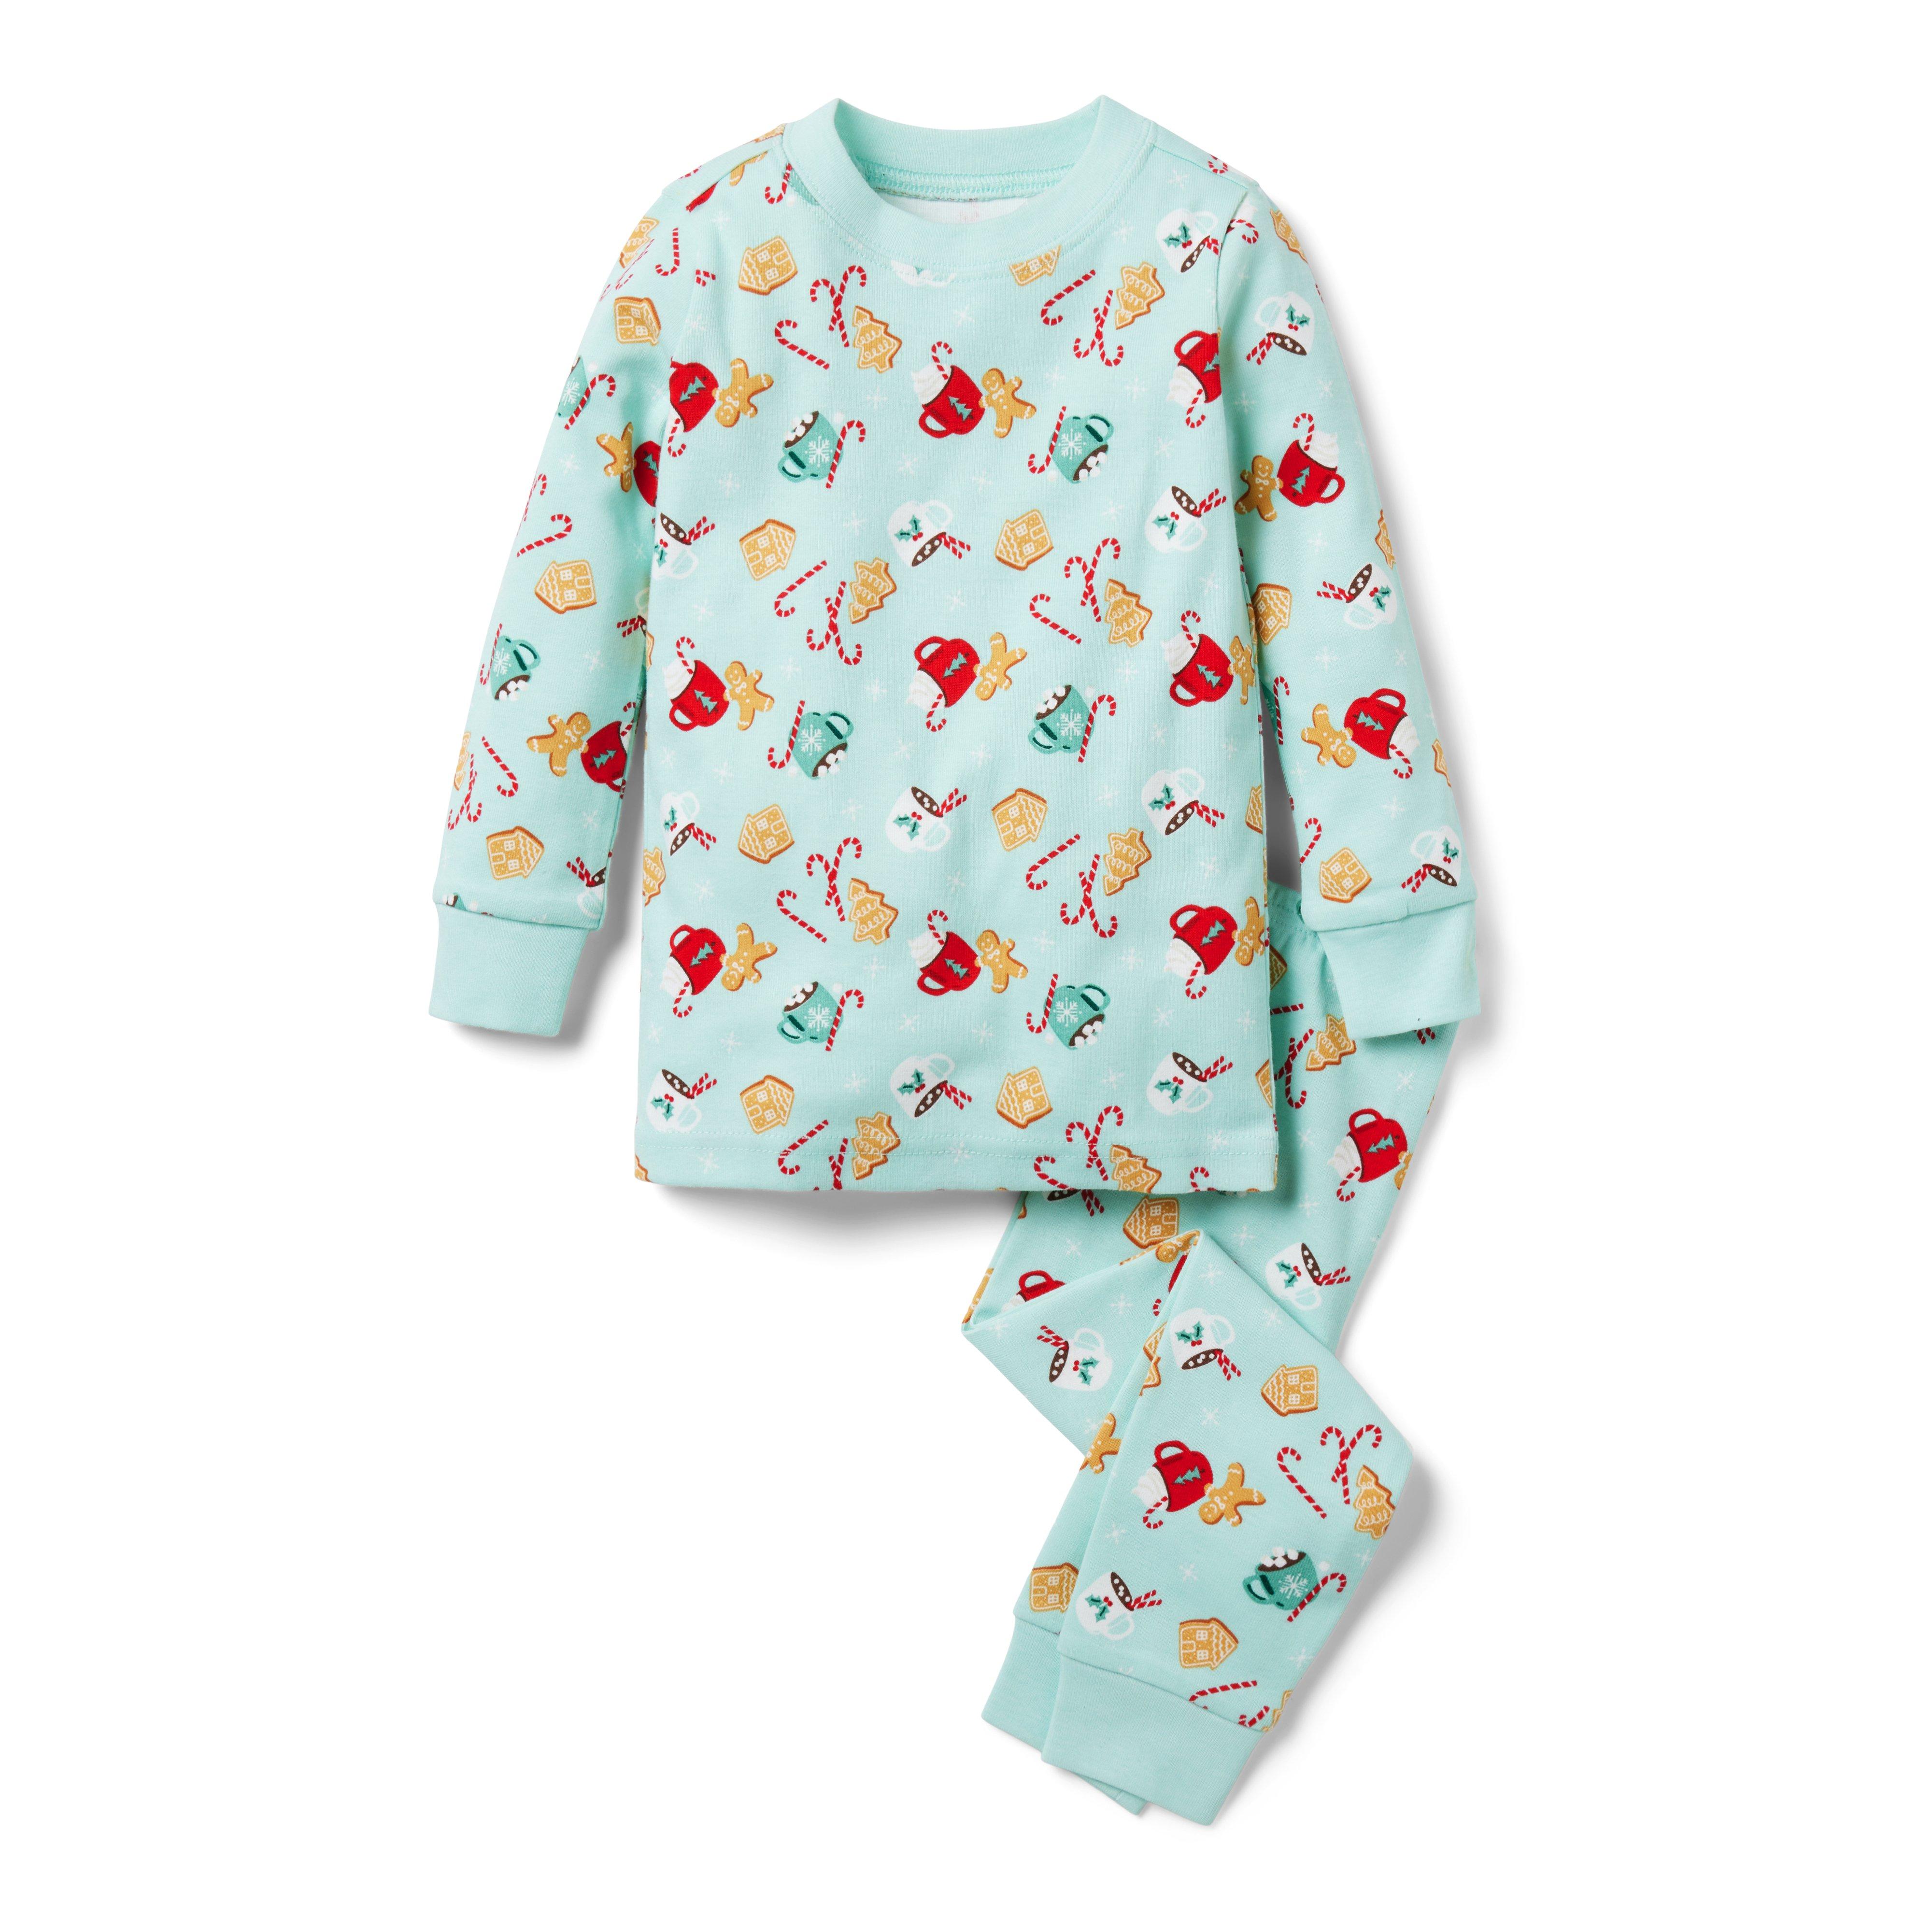 Sleepwear & Pajamas for Girls, Boys, Newborns, and Tween at Janie and Jack